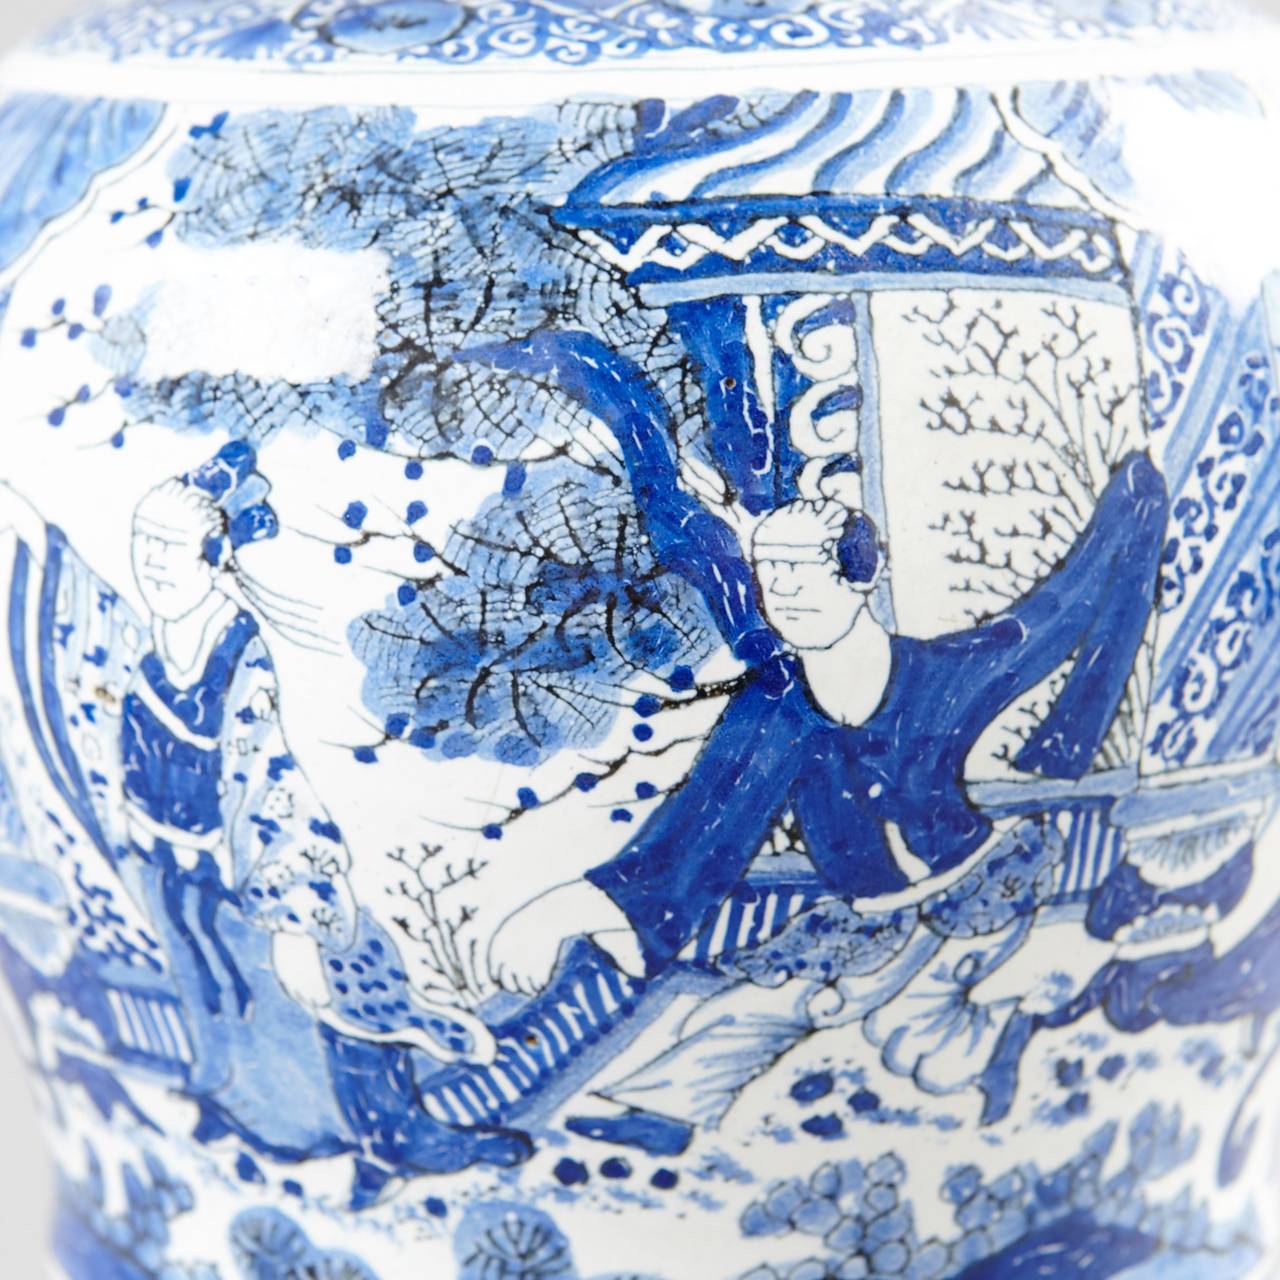 Glazed pottery with blue motifs.